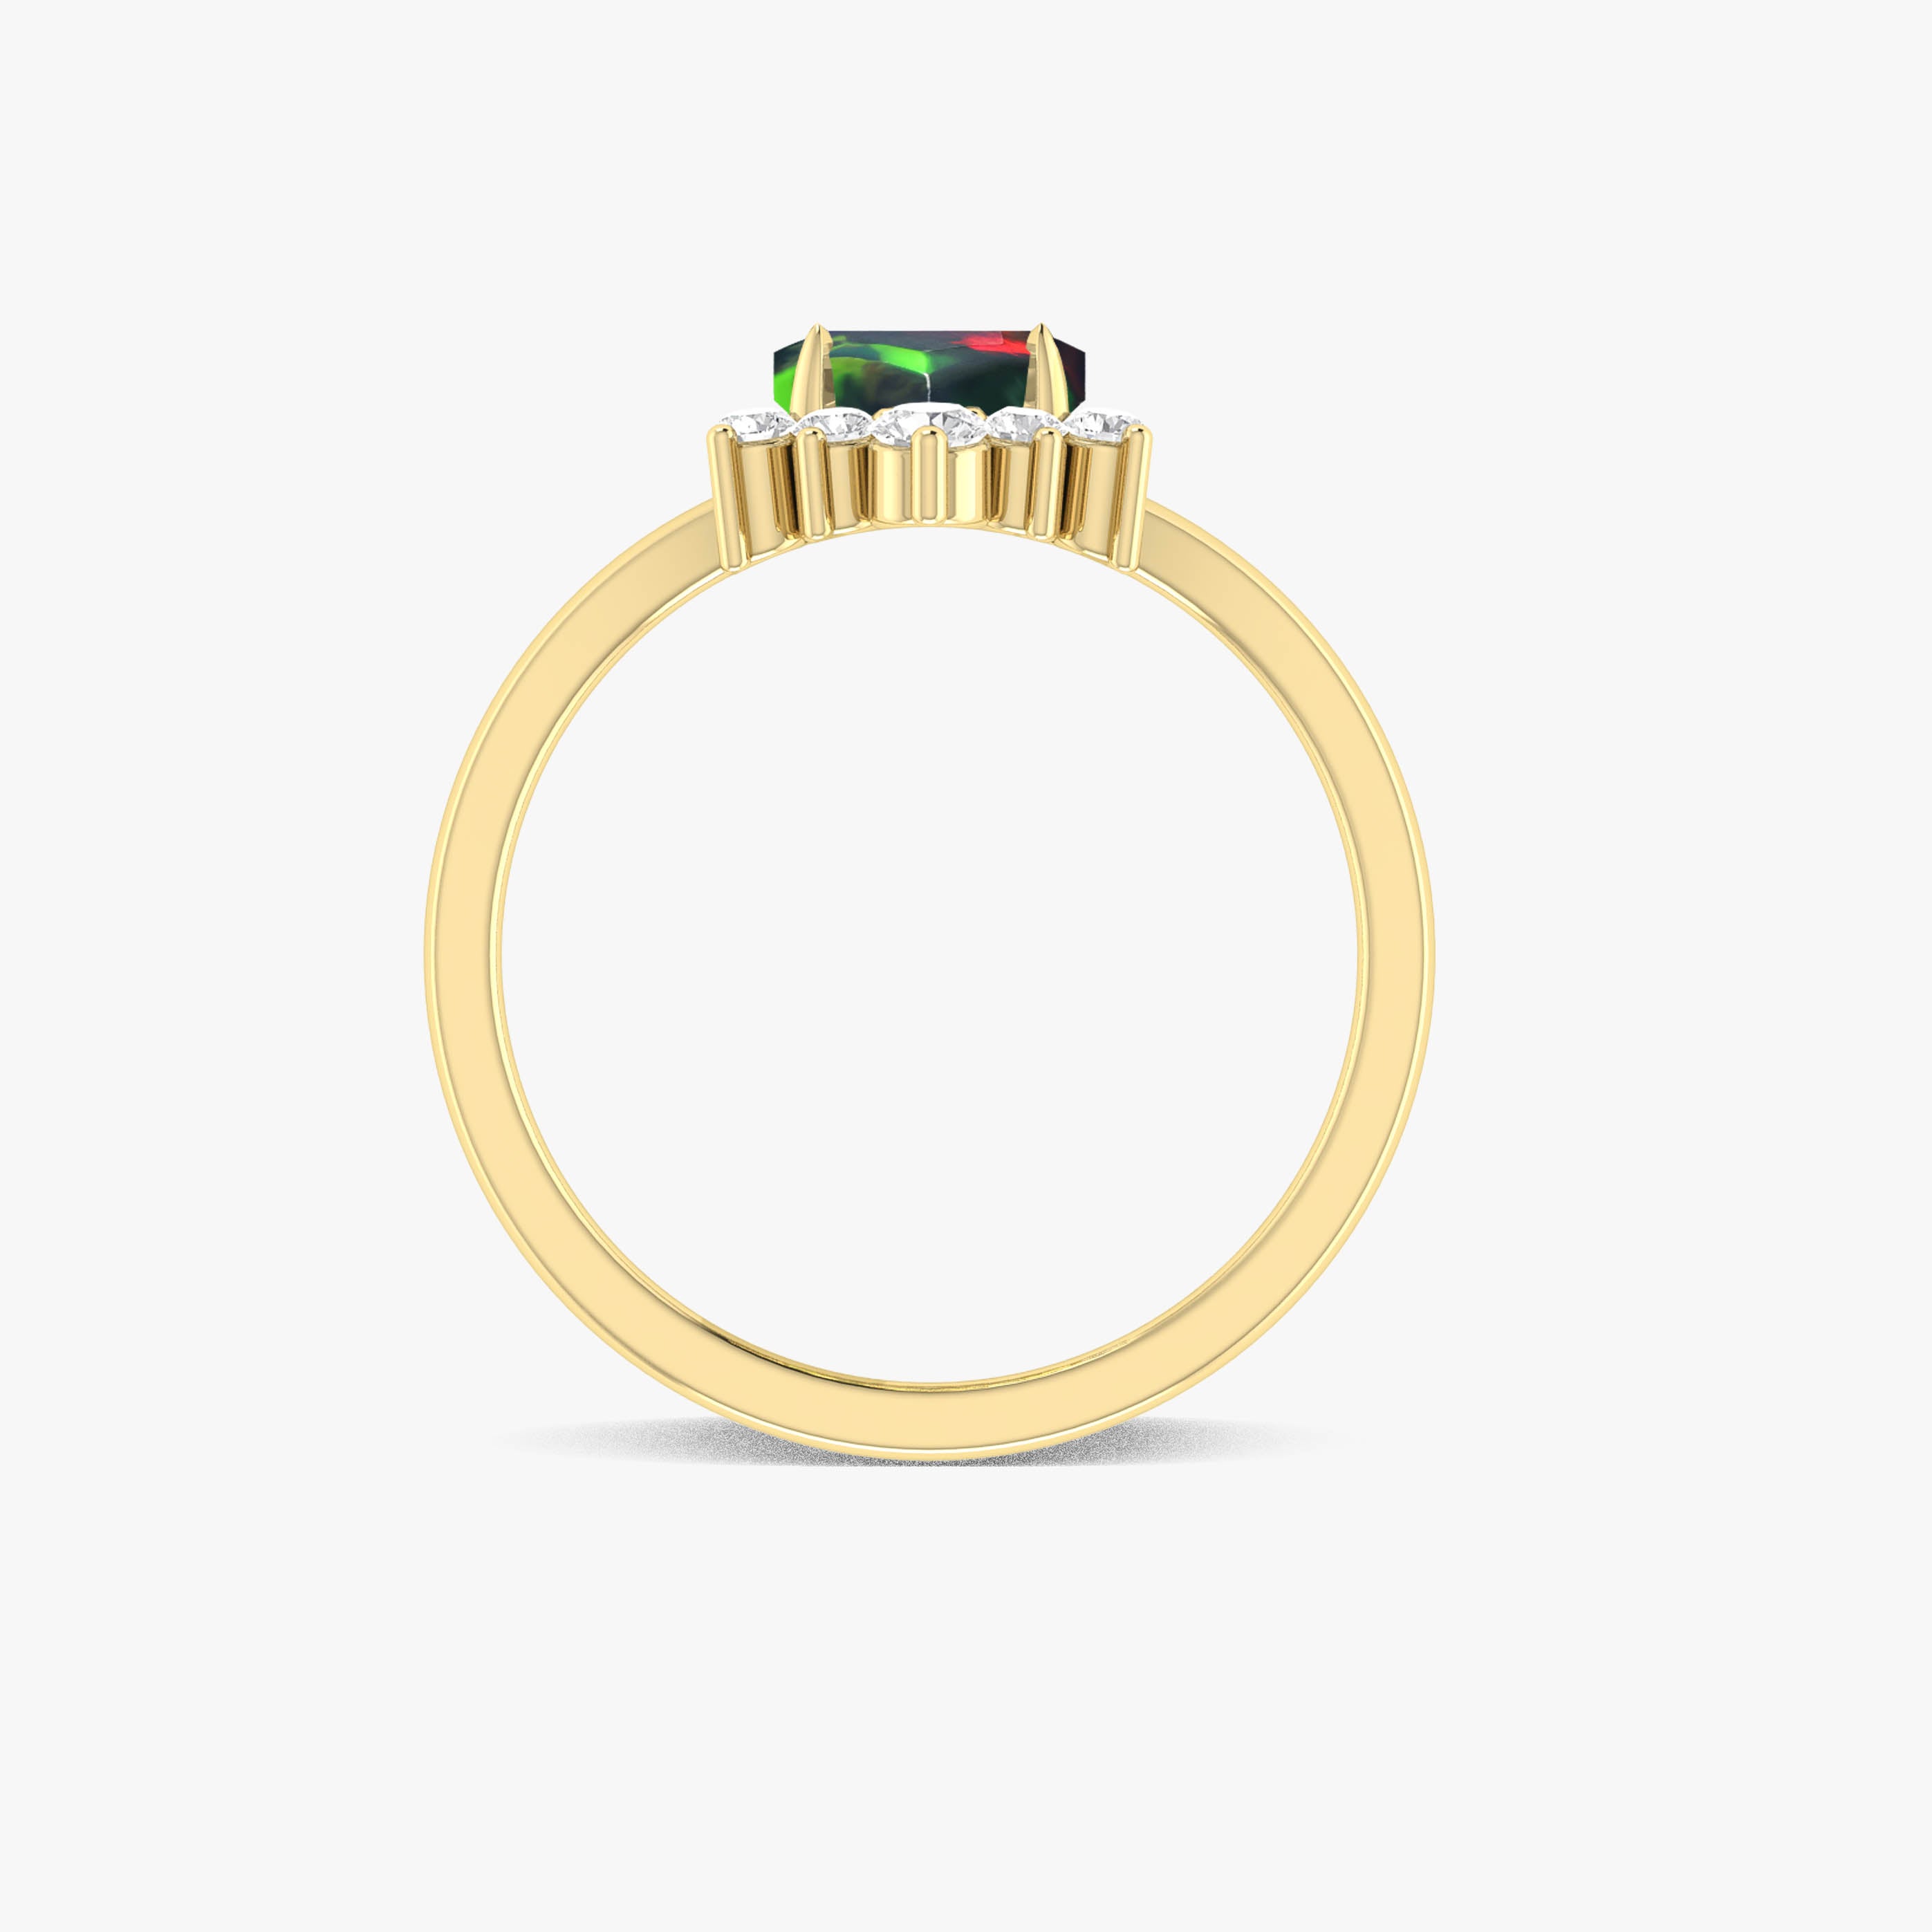 Natural Black Opal Hexagon Gemstone Ring